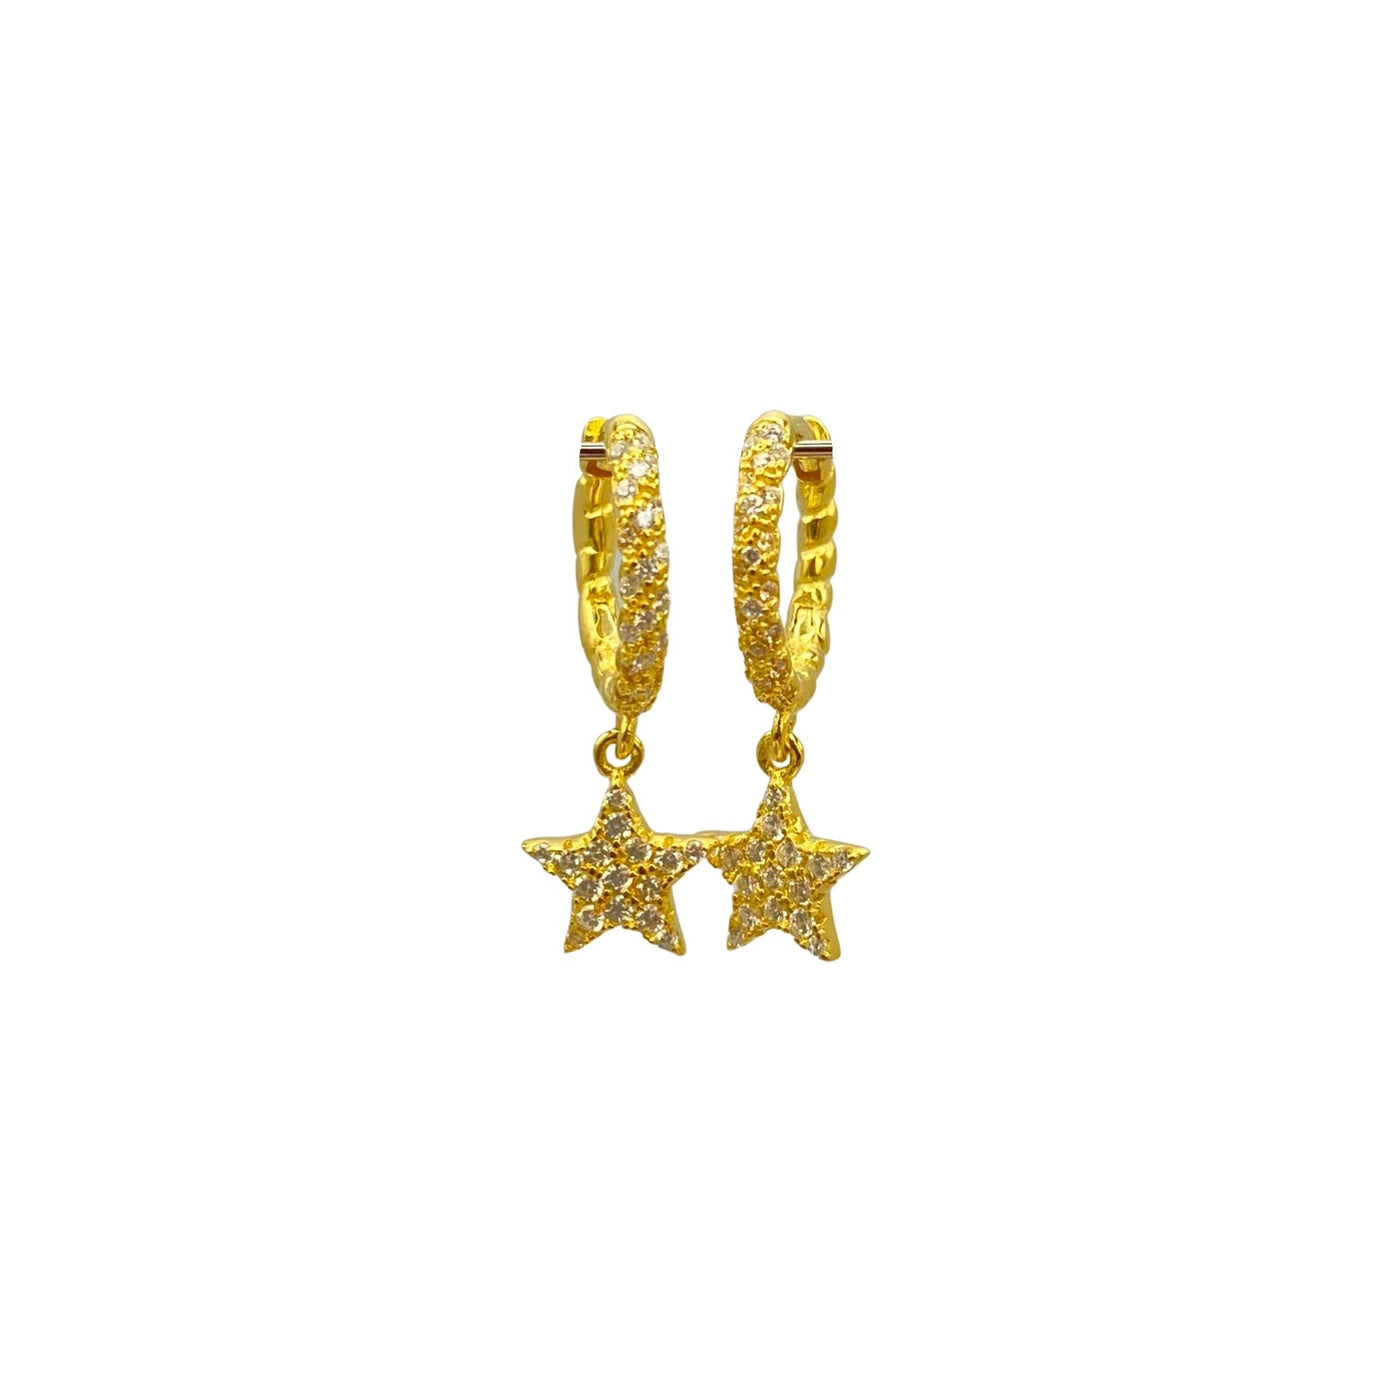 Silver hoop earrings with star charm